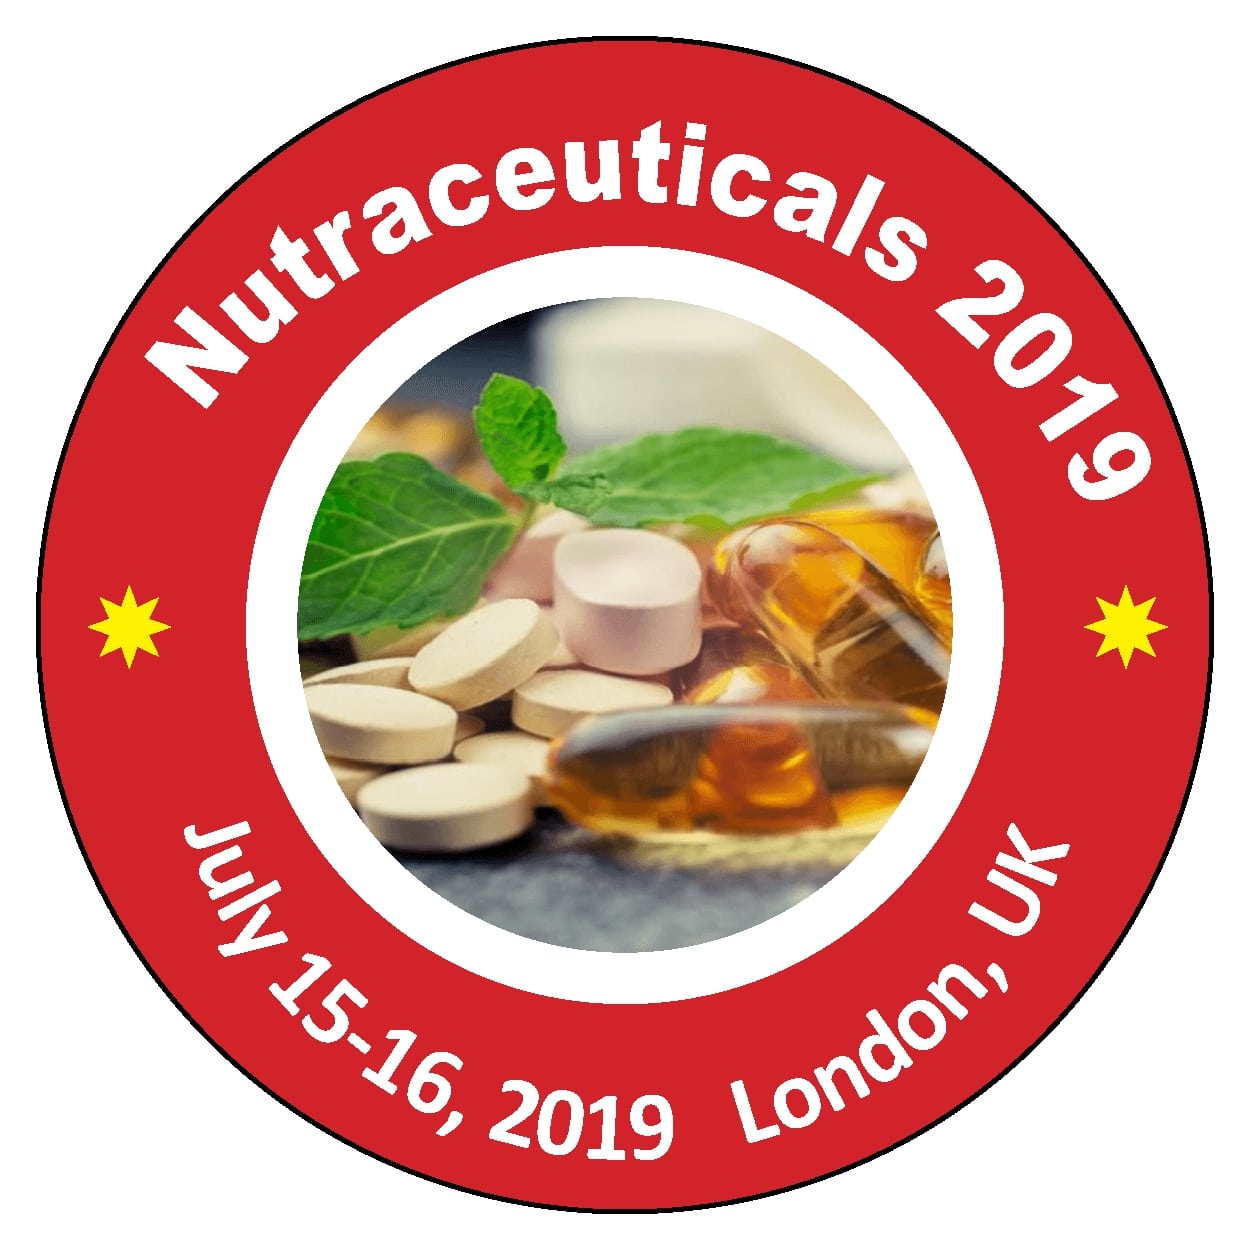 Nutraceuticals 2019, London, Swansea, United Kingdom